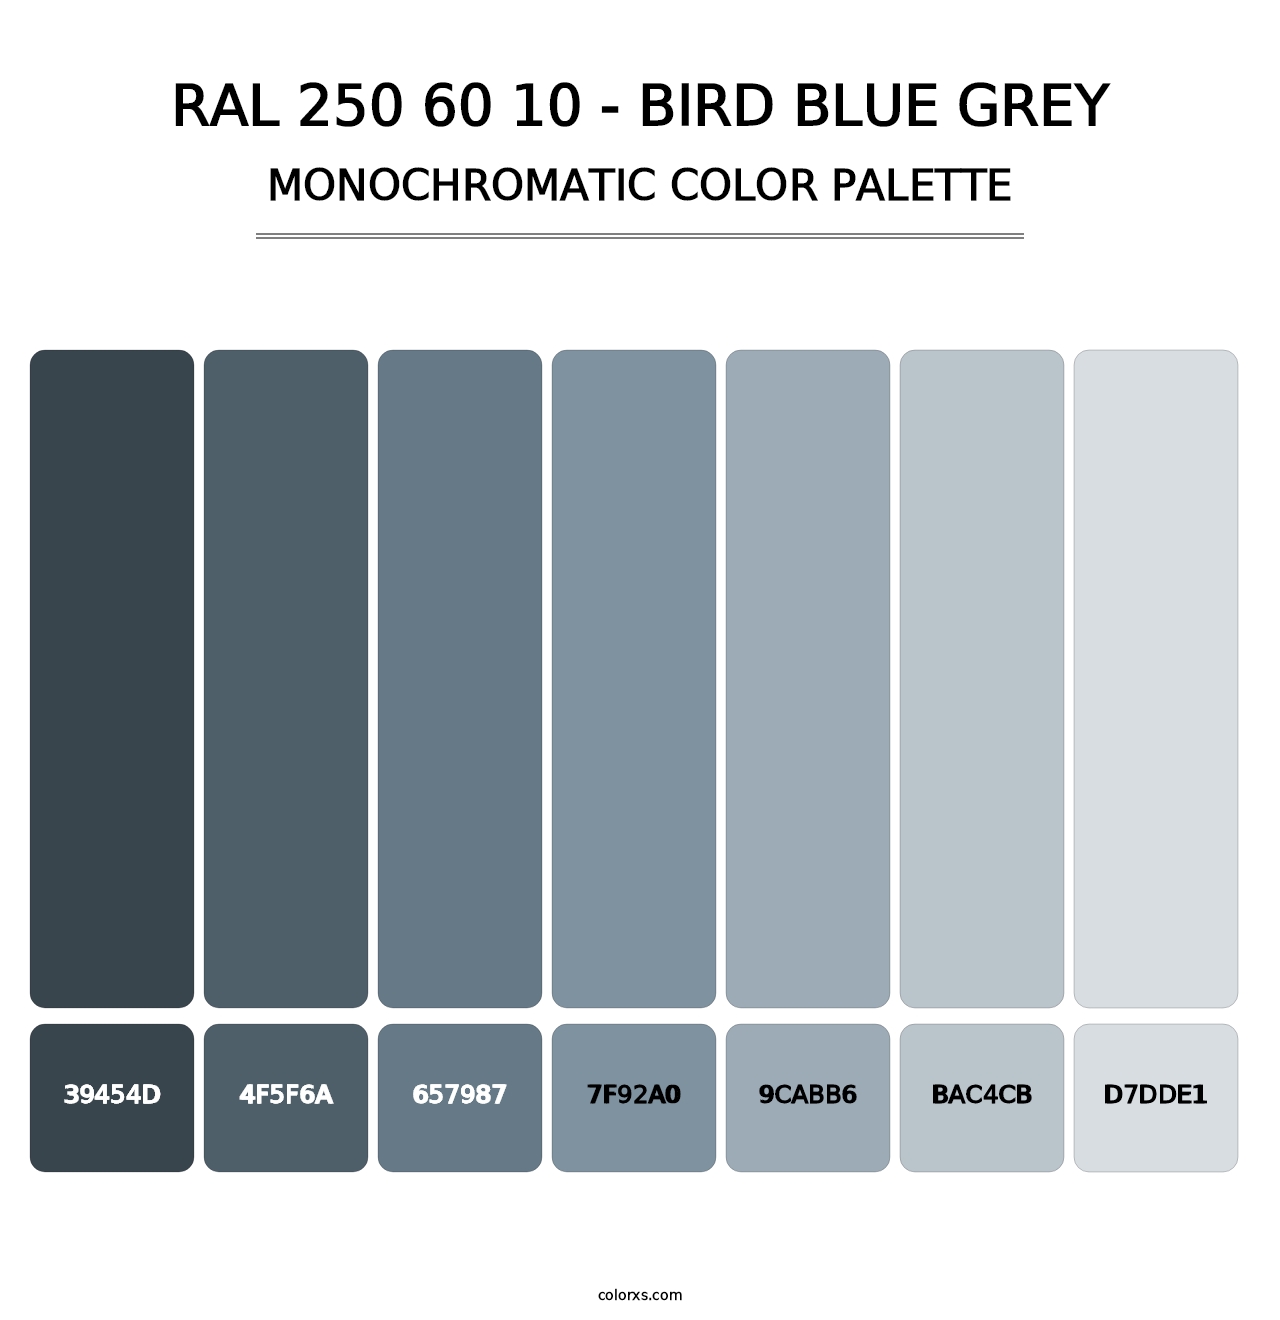 RAL 250 60 10 - Bird Blue Grey - Monochromatic Color Palette